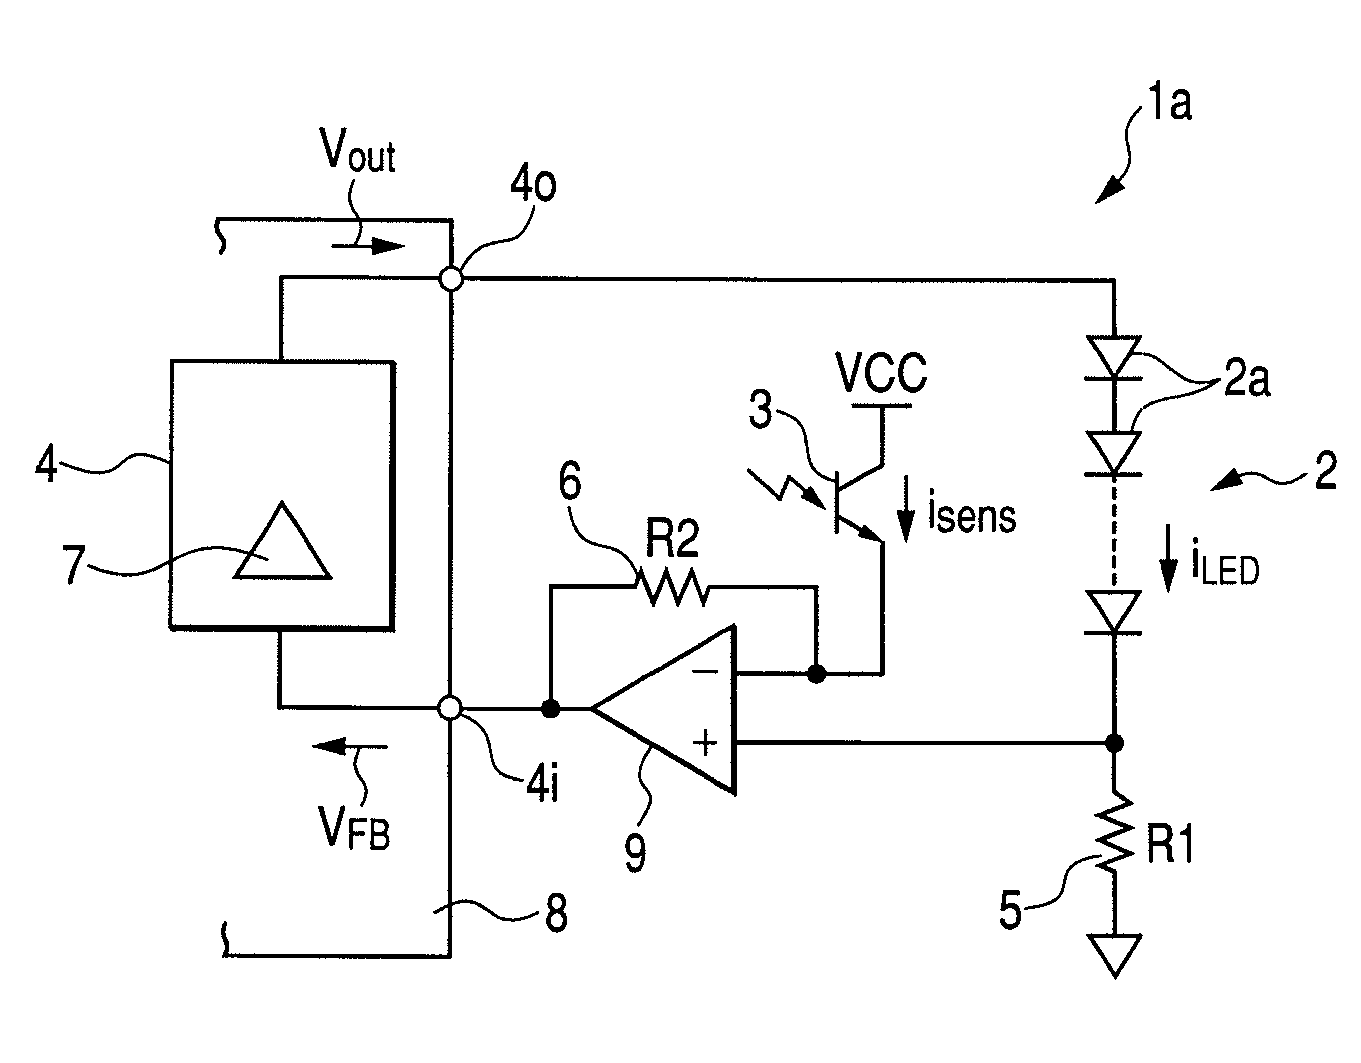 Light control circuit